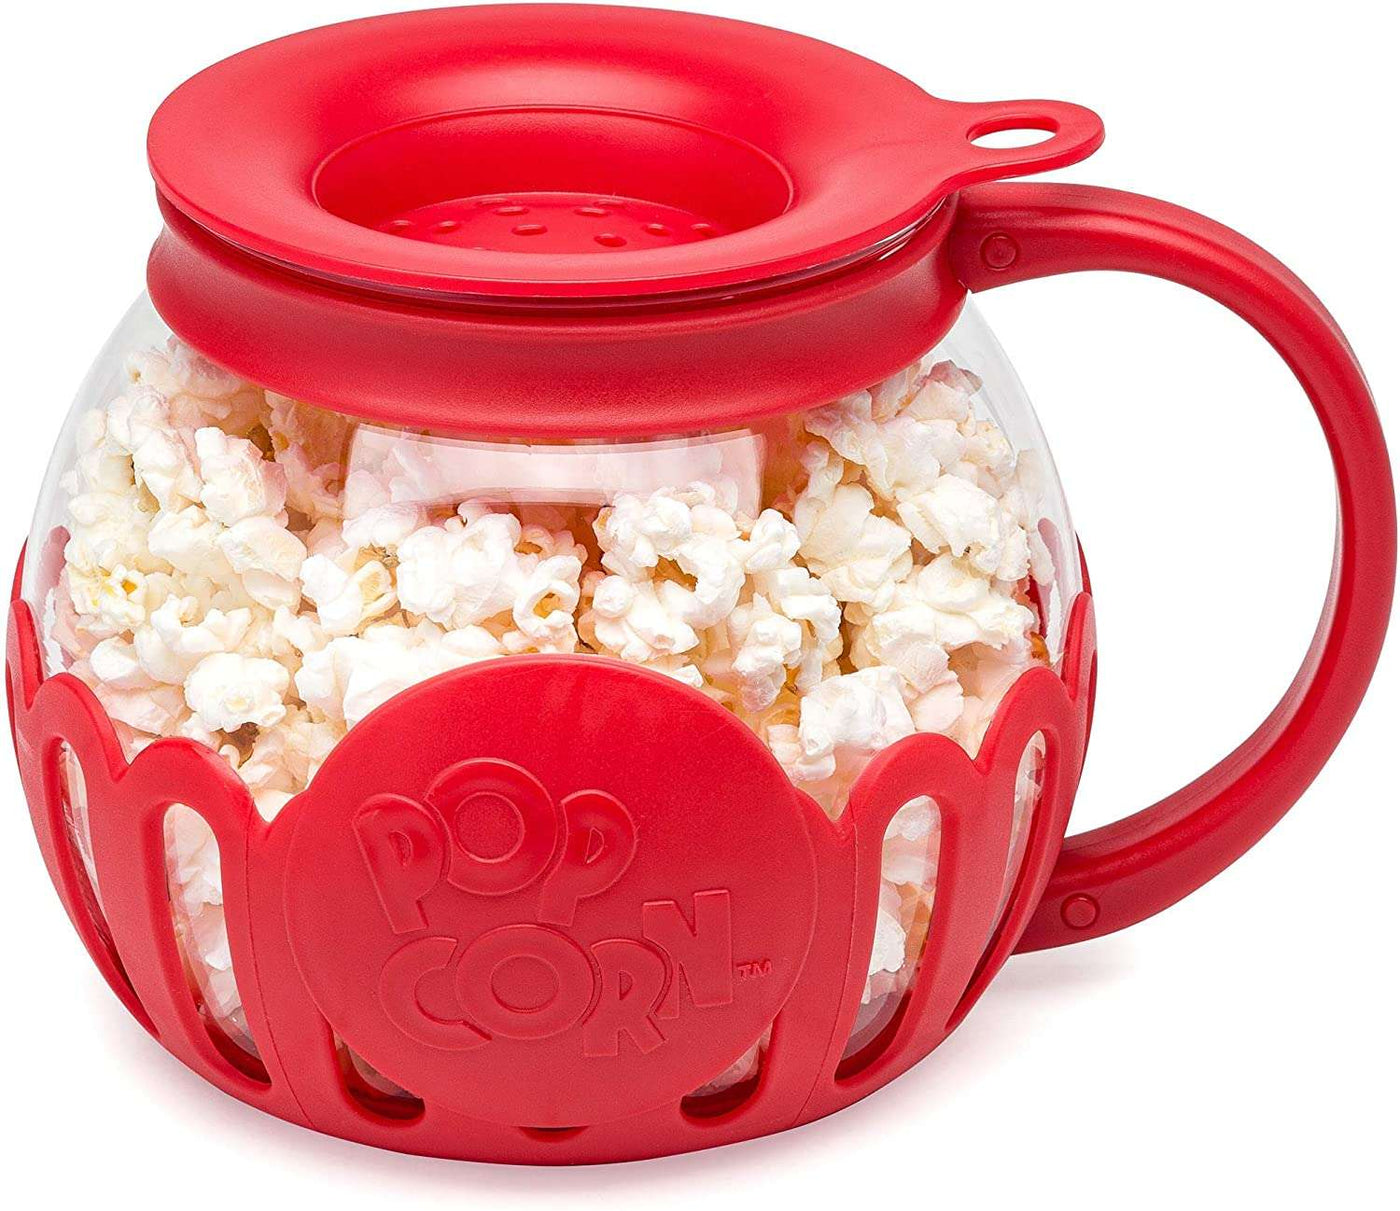 Ecolution 3qt. Kitchen Extras Popcorn Popper - Red